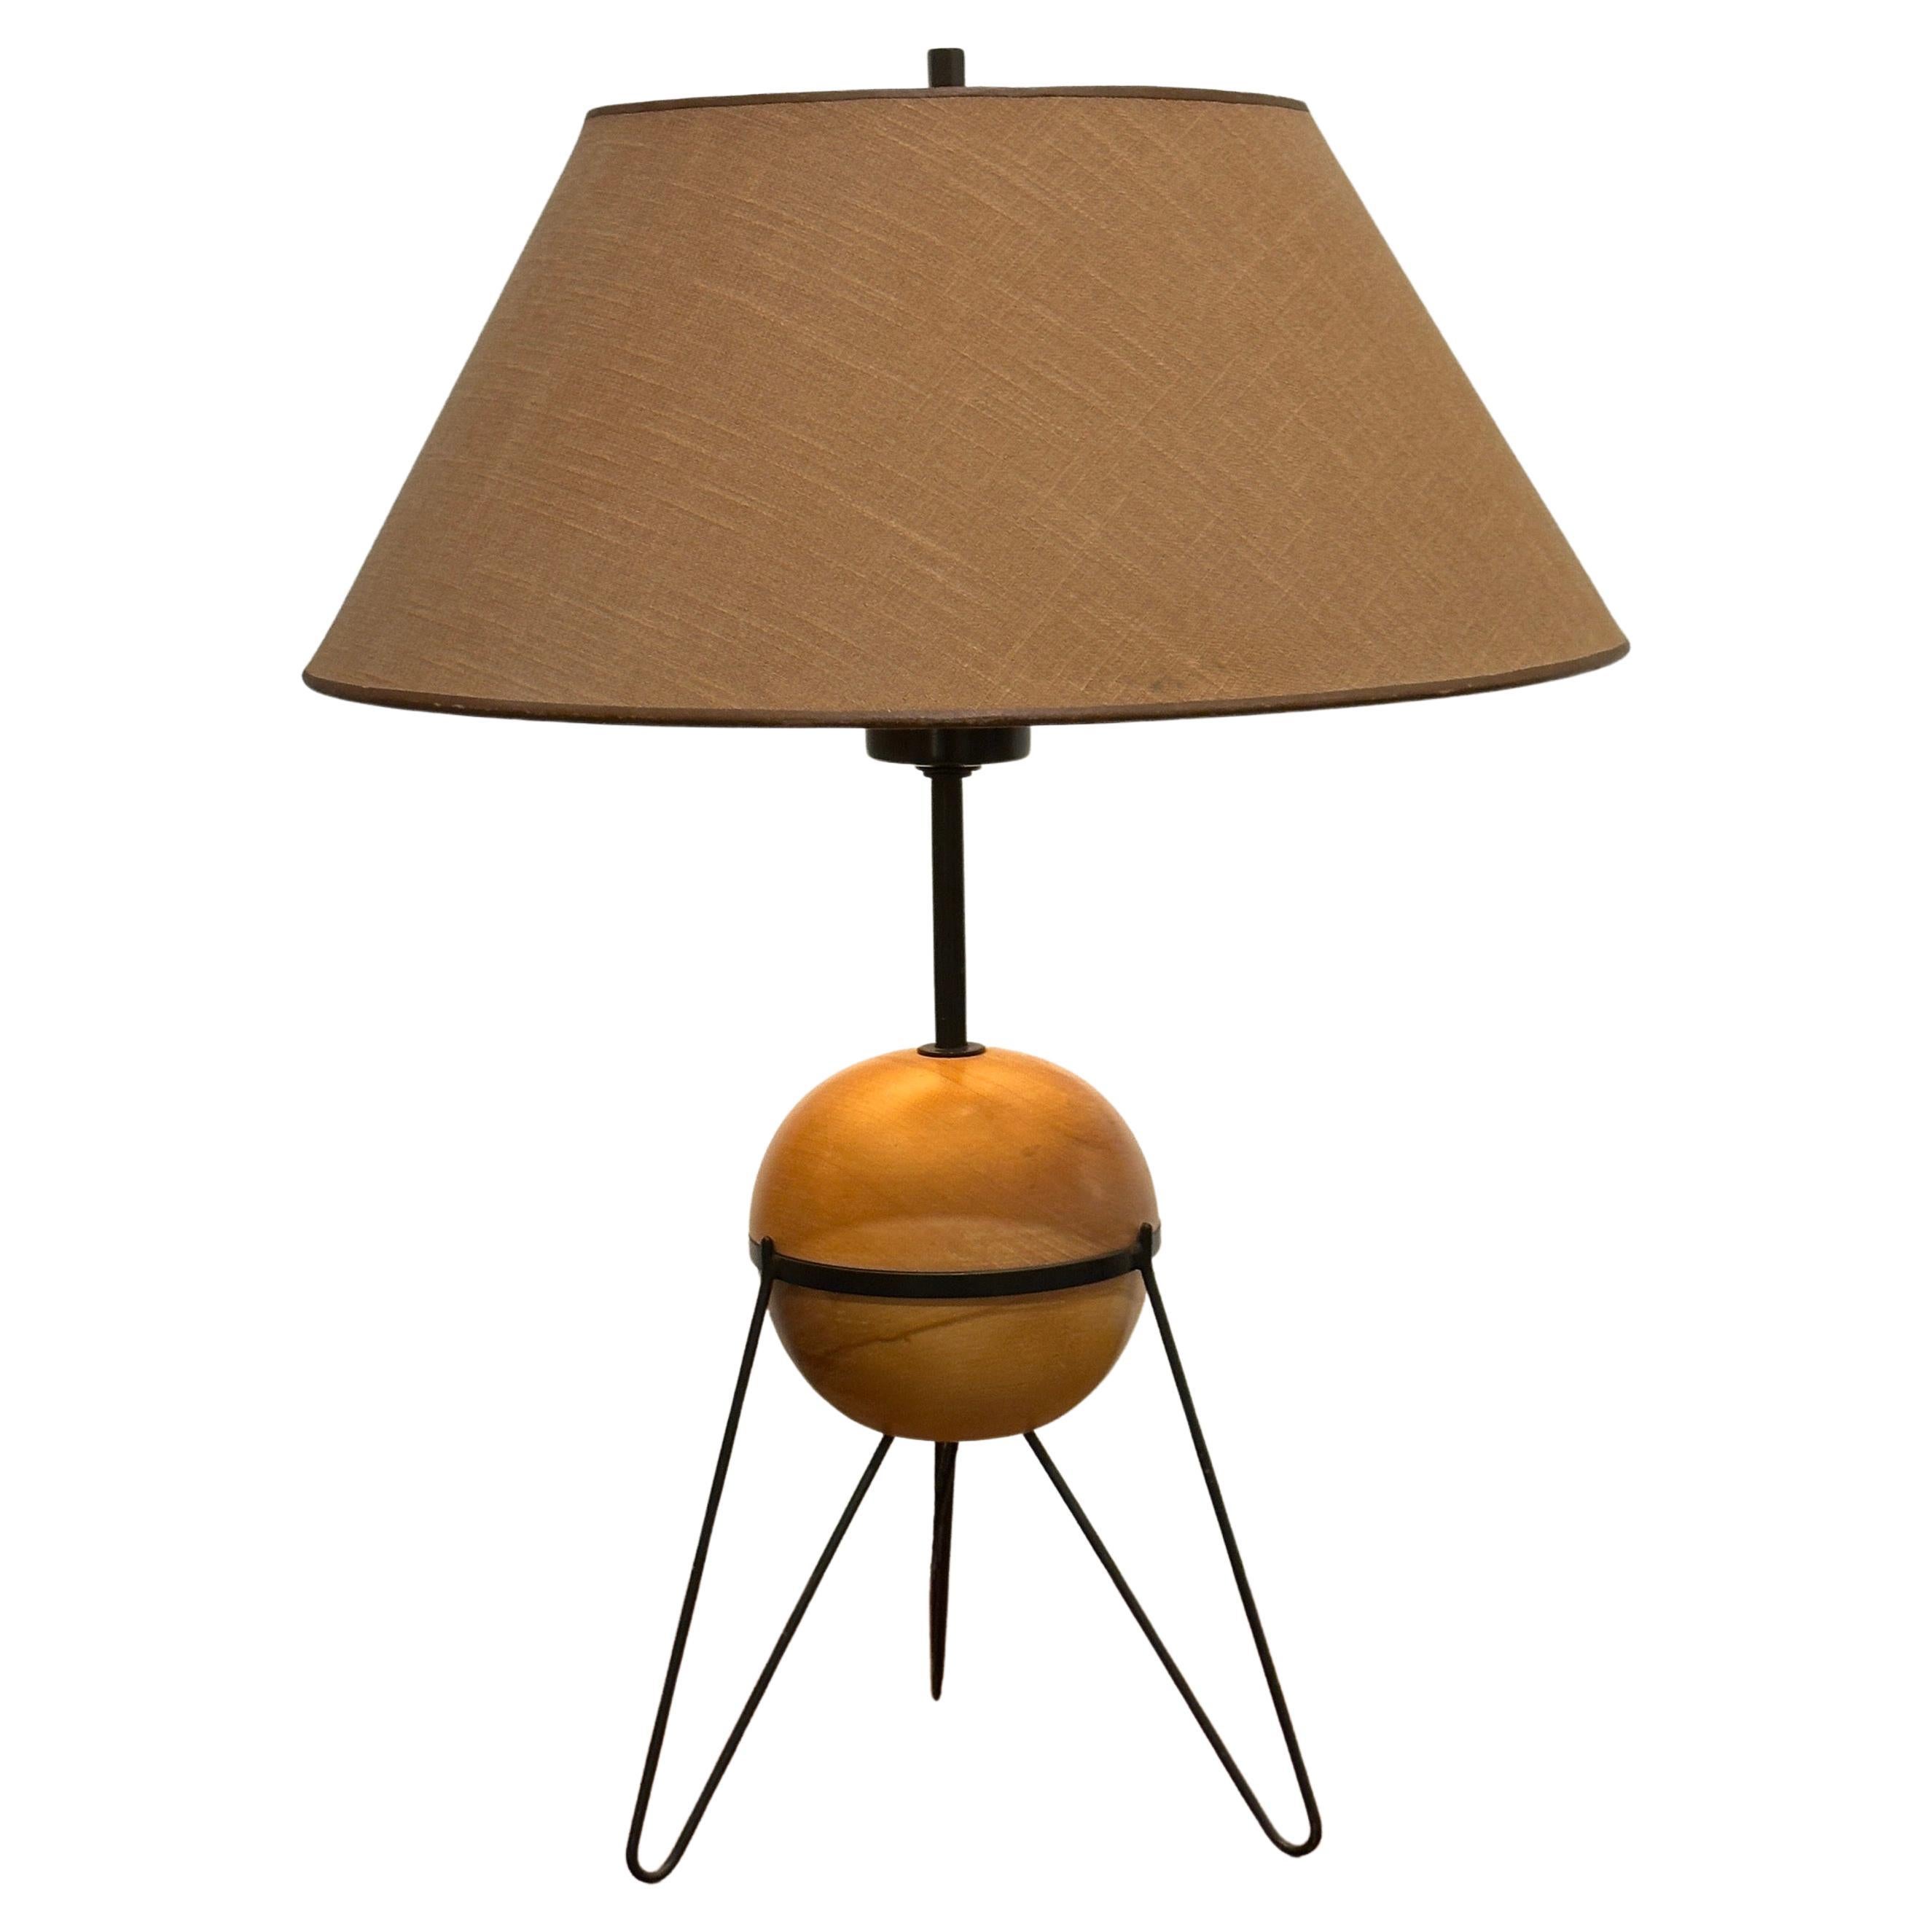 Yasha Heifetz for Heifetz Birch Globe and Metal Tripod Base Table Lamp, ca 1950s